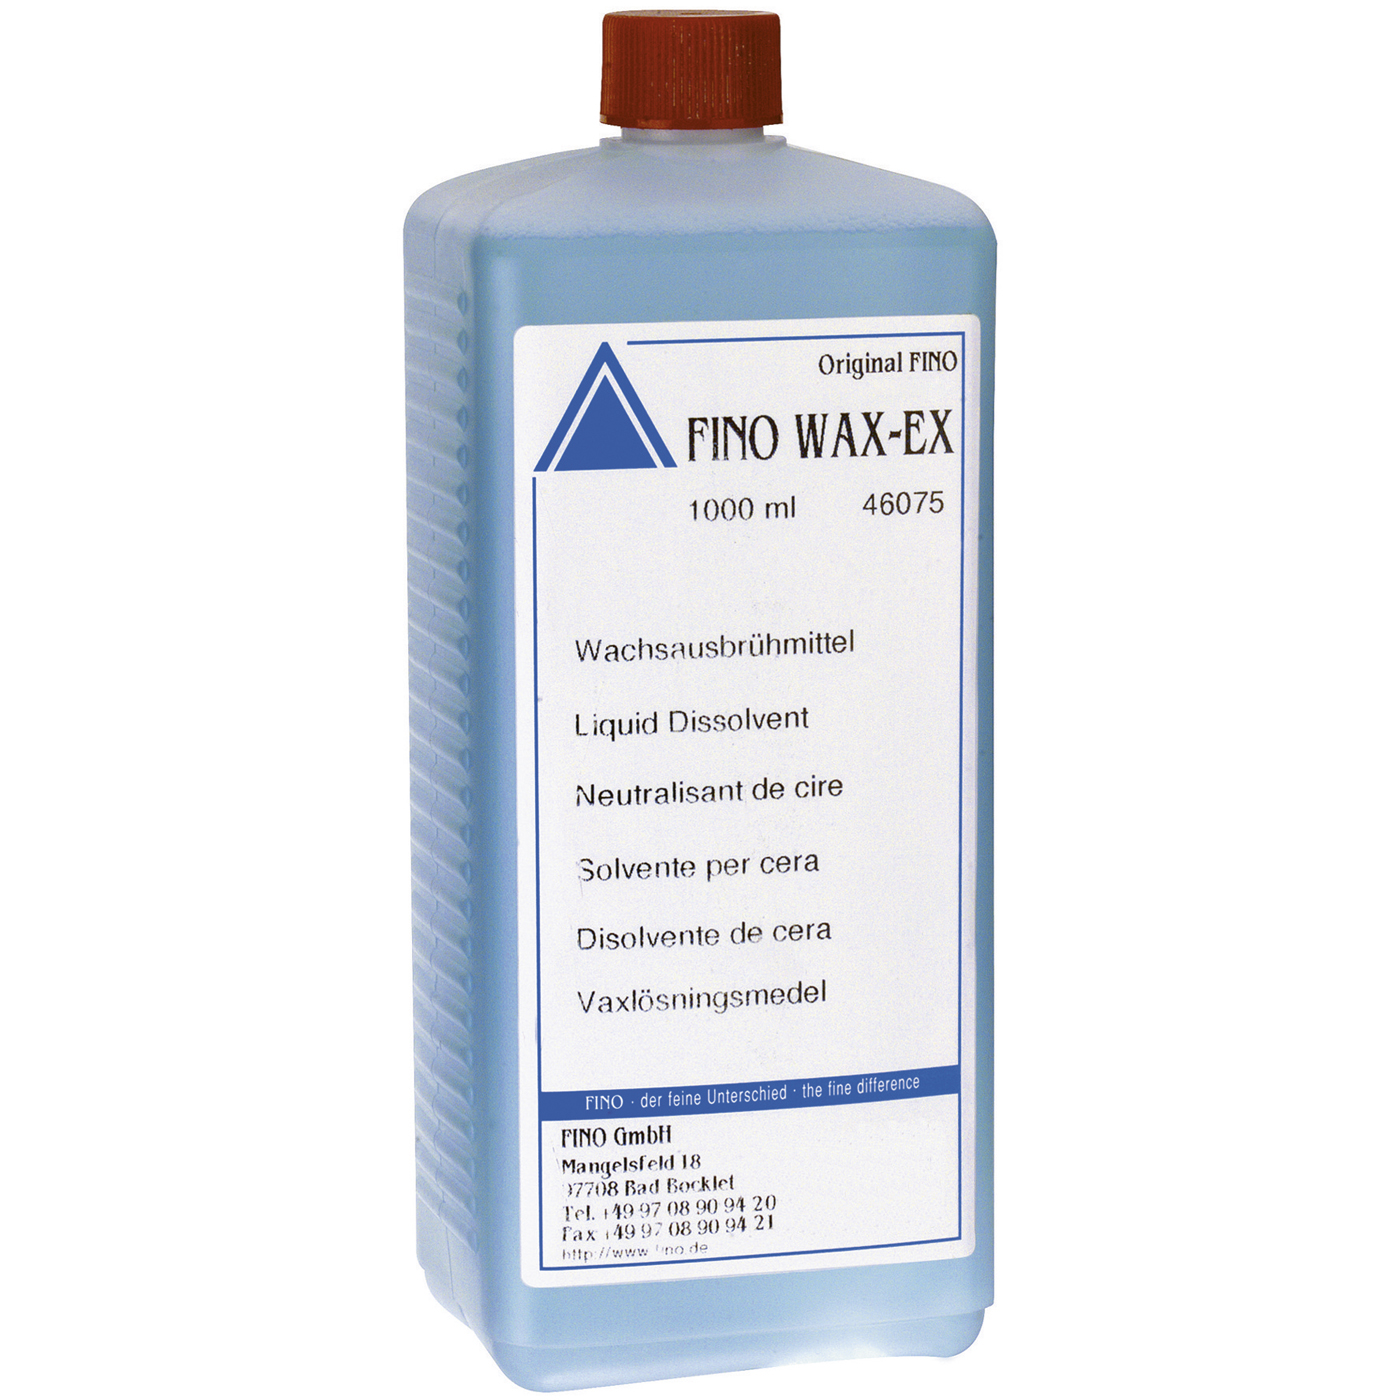 FINO WAX-EX Wachsausbrühmittel - 1000 ml